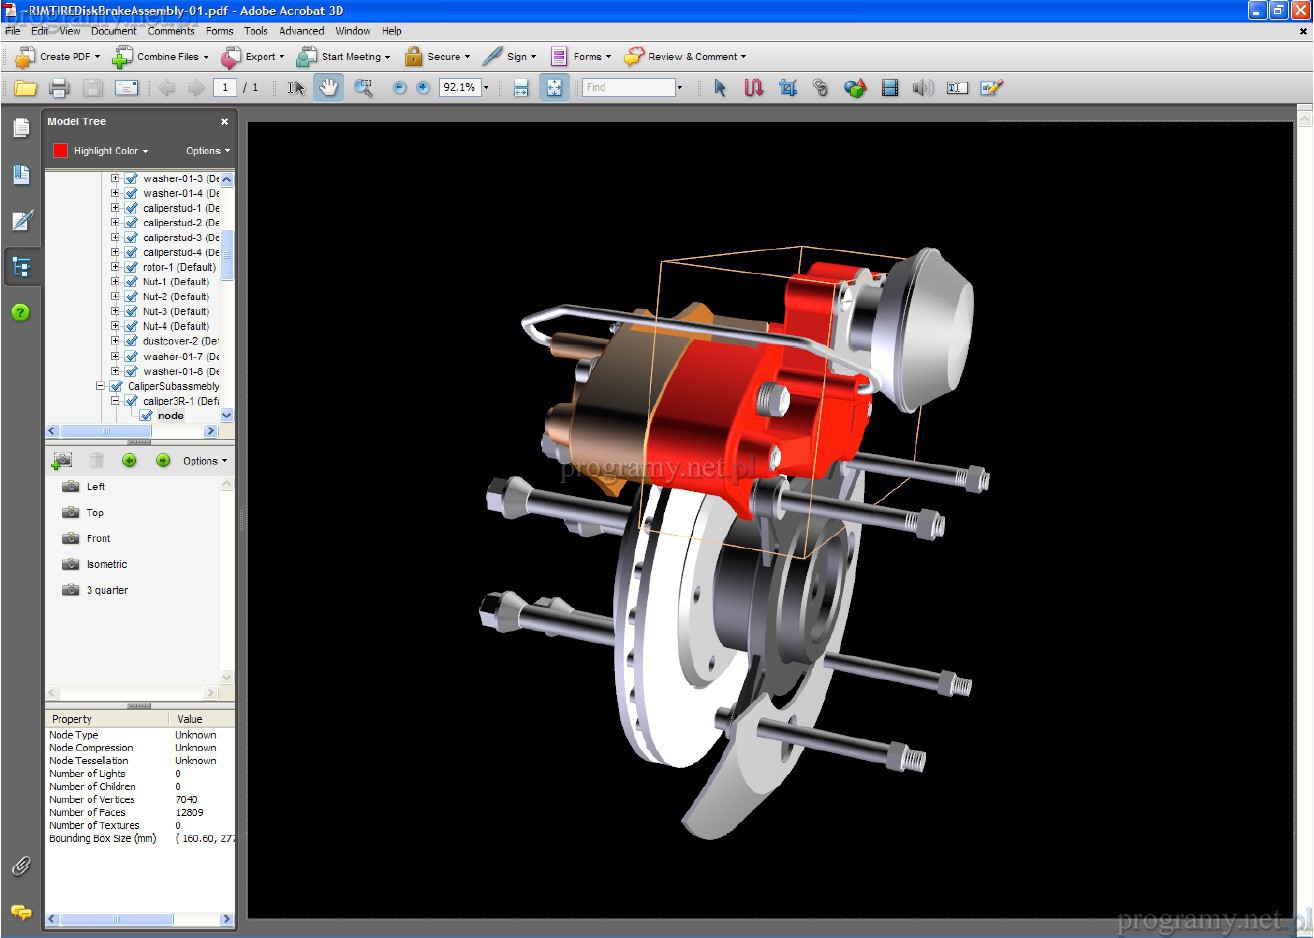 Displaying 3D models in PDFs, Adobe Acrobat